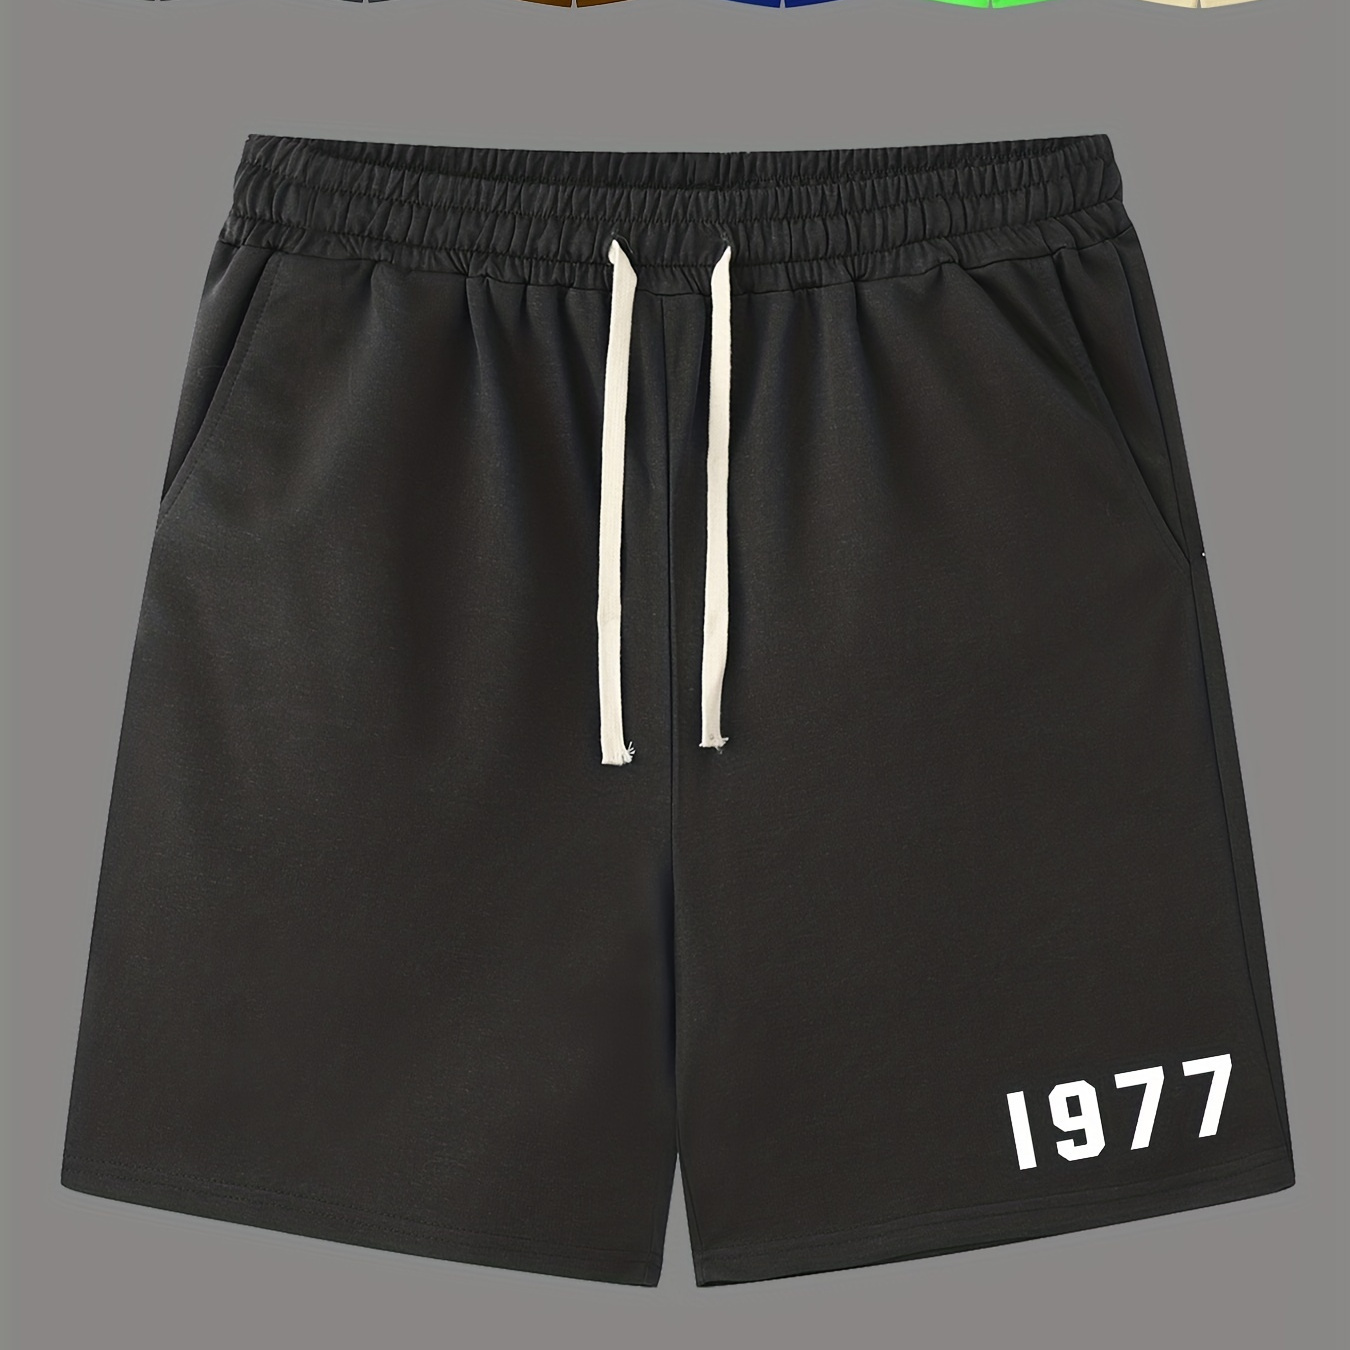 

Number 1977 Print Comfy Shorts, Men's Casual Slightly Stretch Waist Drawstring Shorts For Summer Basketball Beach Resort